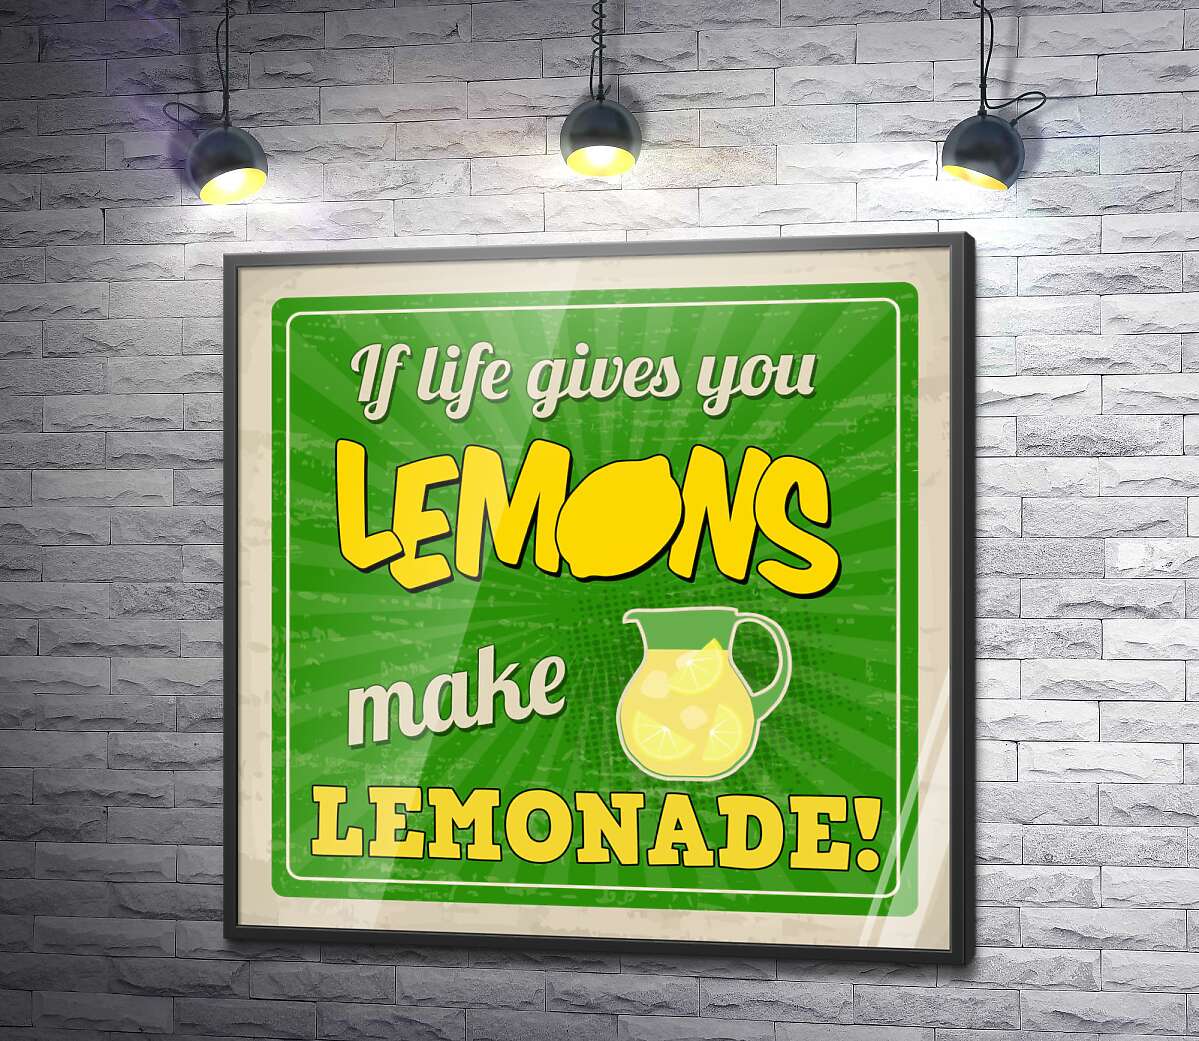 постер Мотивационная надпись: "If life gives you lemons make lemonade!"